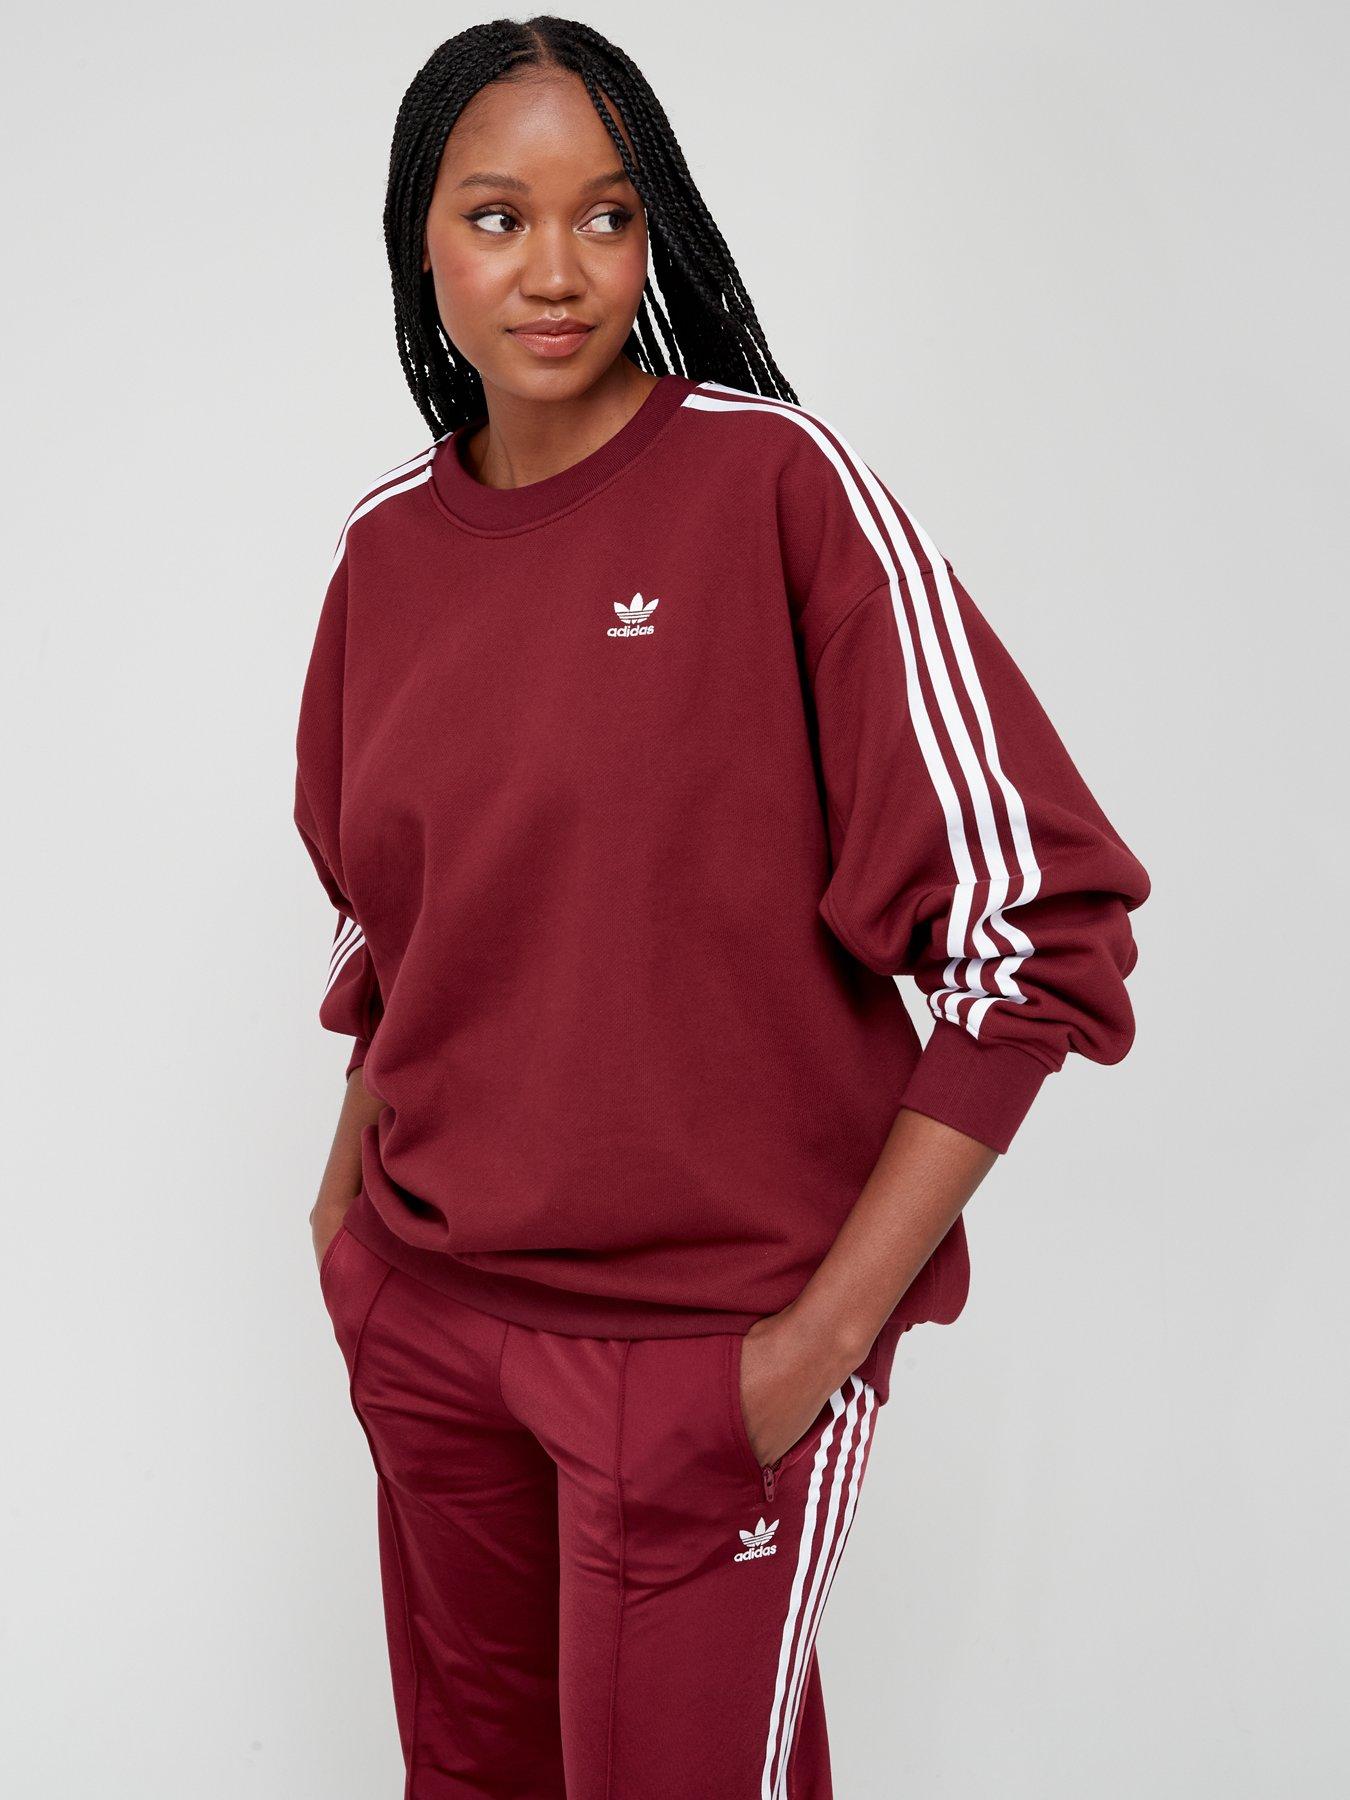 Womens sports clothing | Sports & leisure | Adidas originals |  